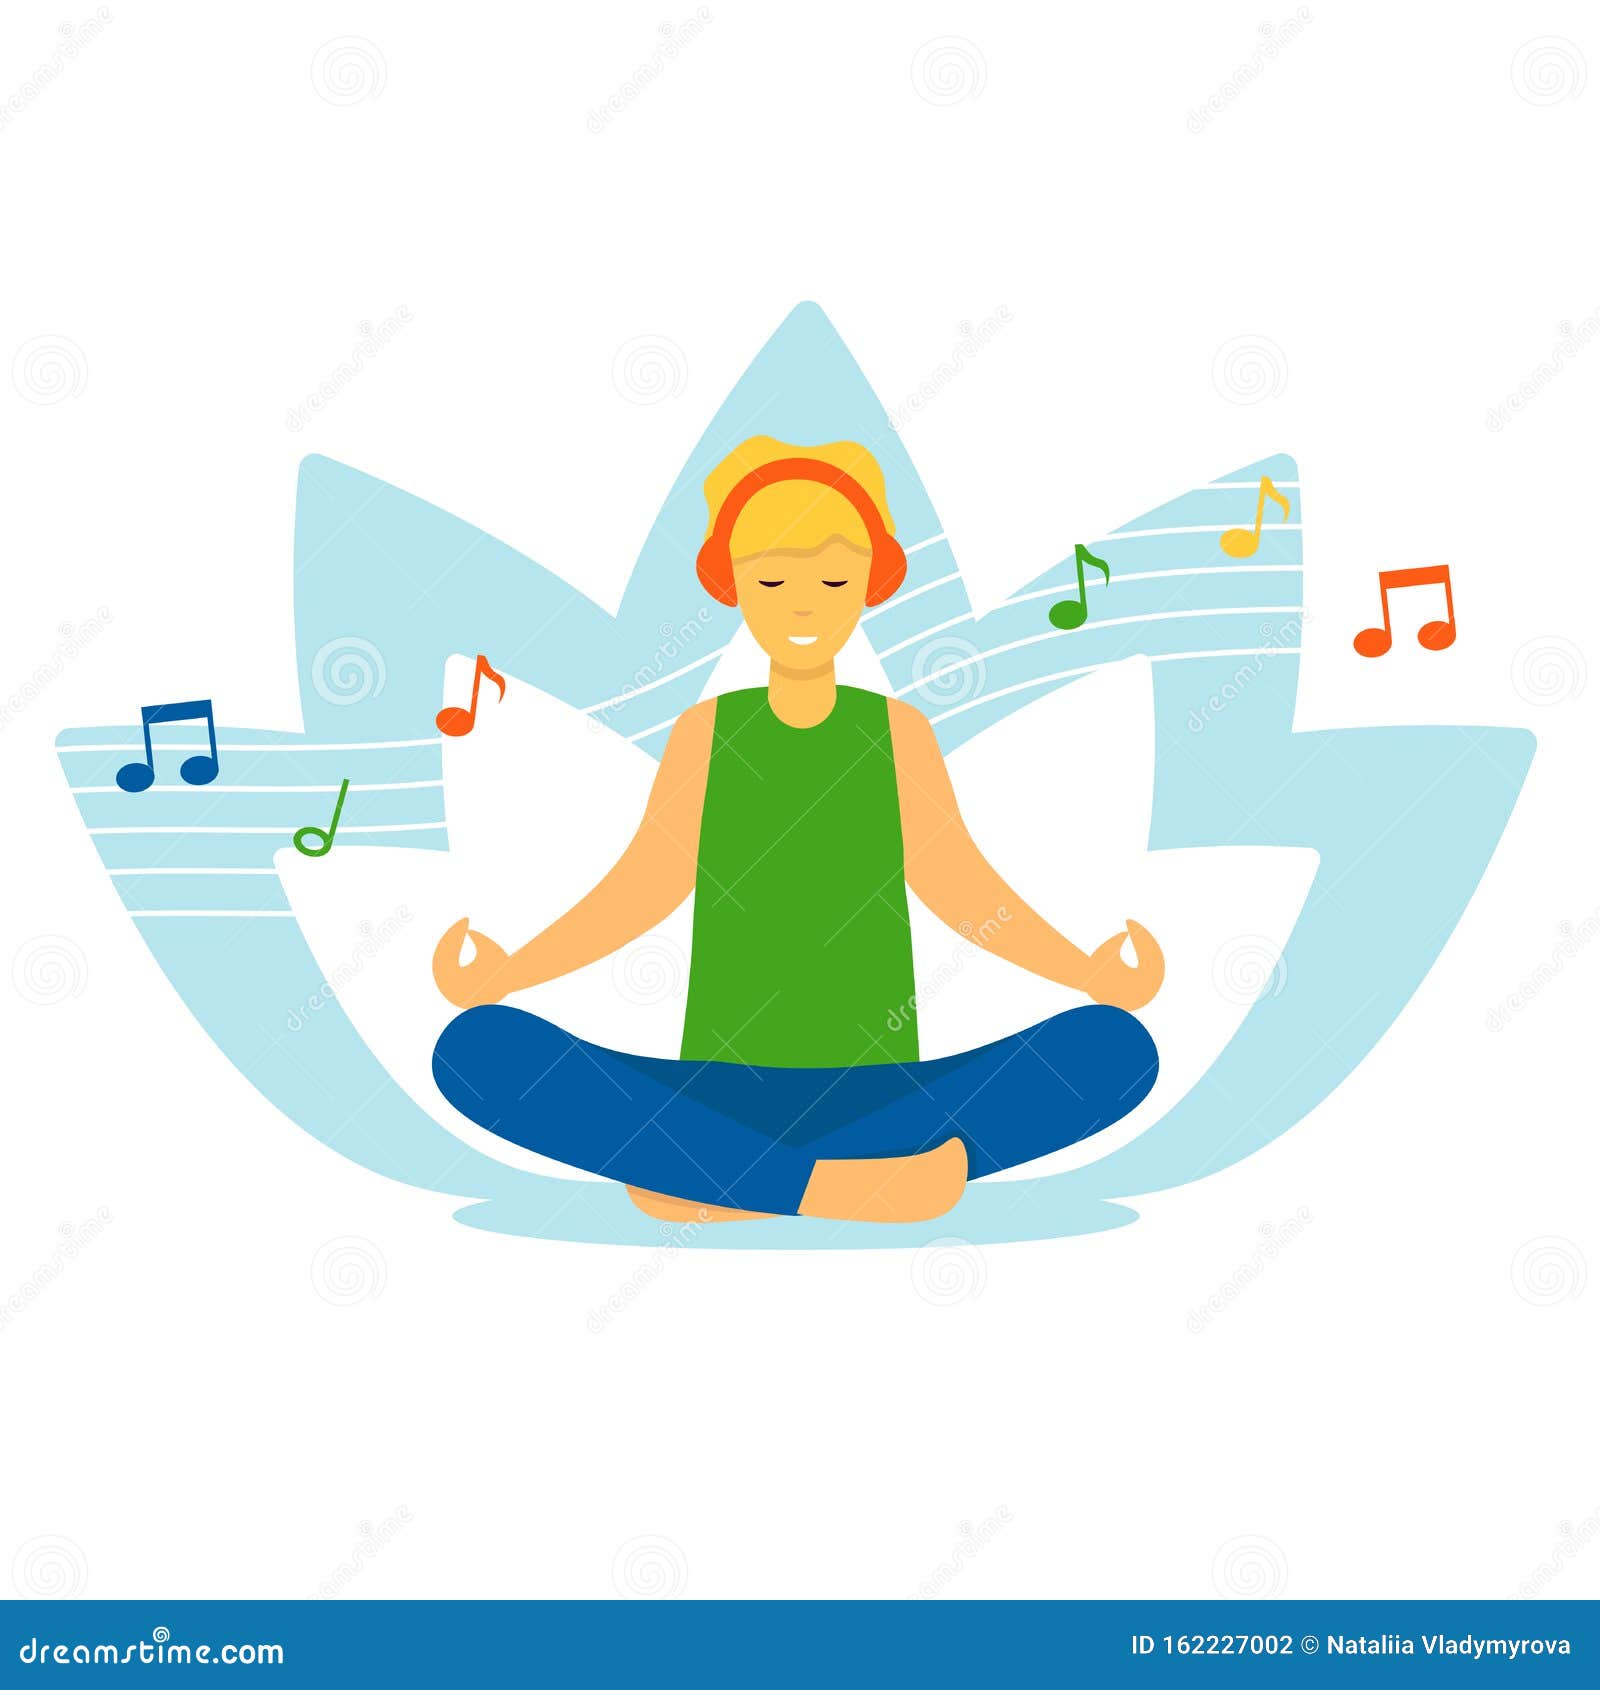 Best Royalty Free Meditation Music - TunePocket